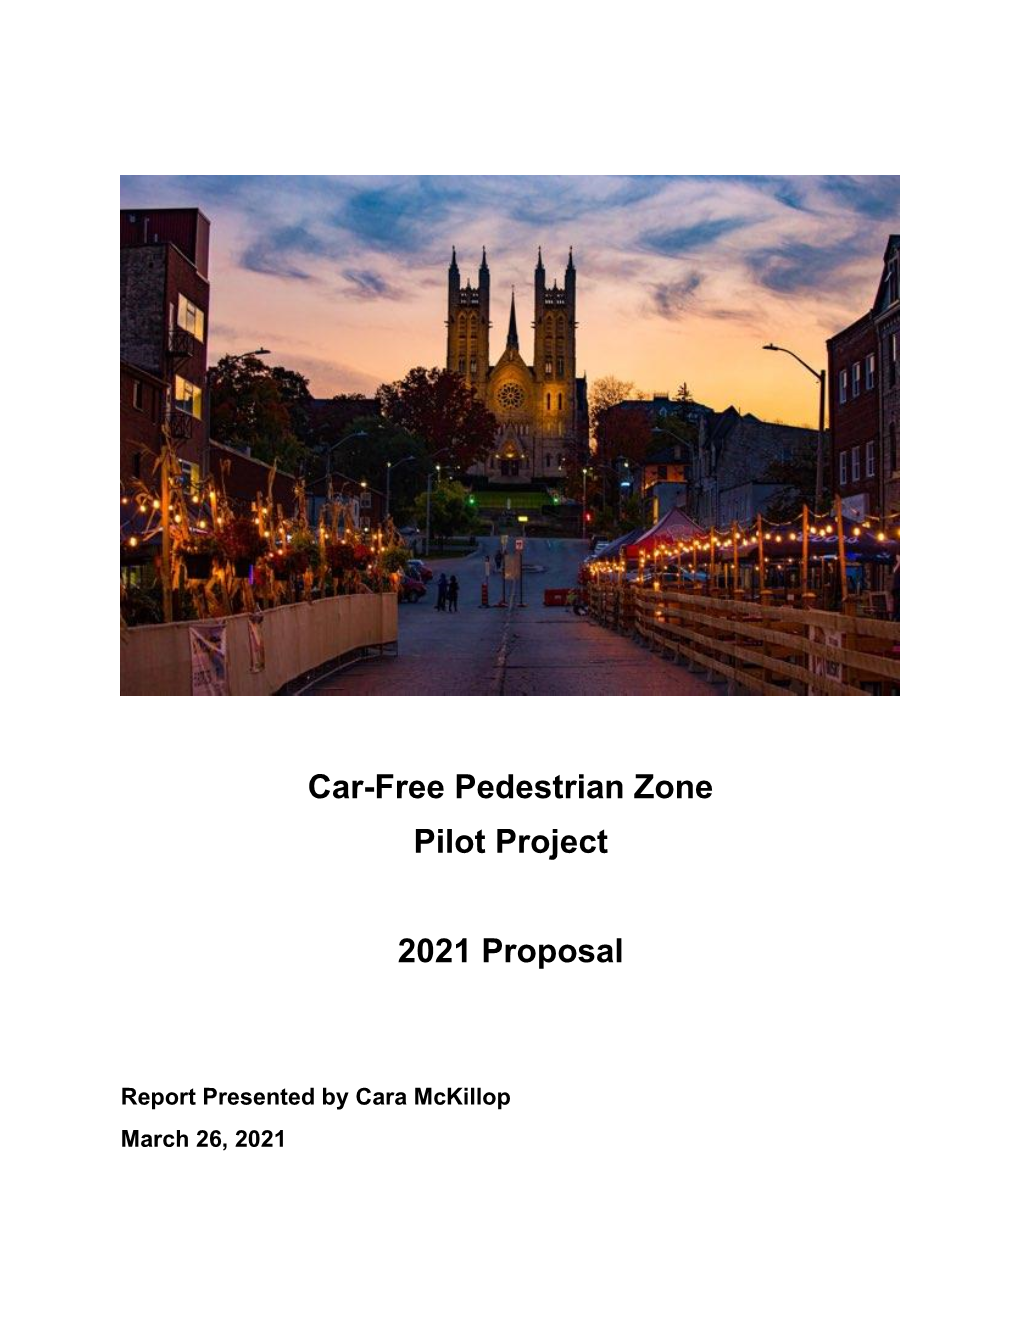 Car-Free Pedestrian Zone Pilot Project 2021 Proposal